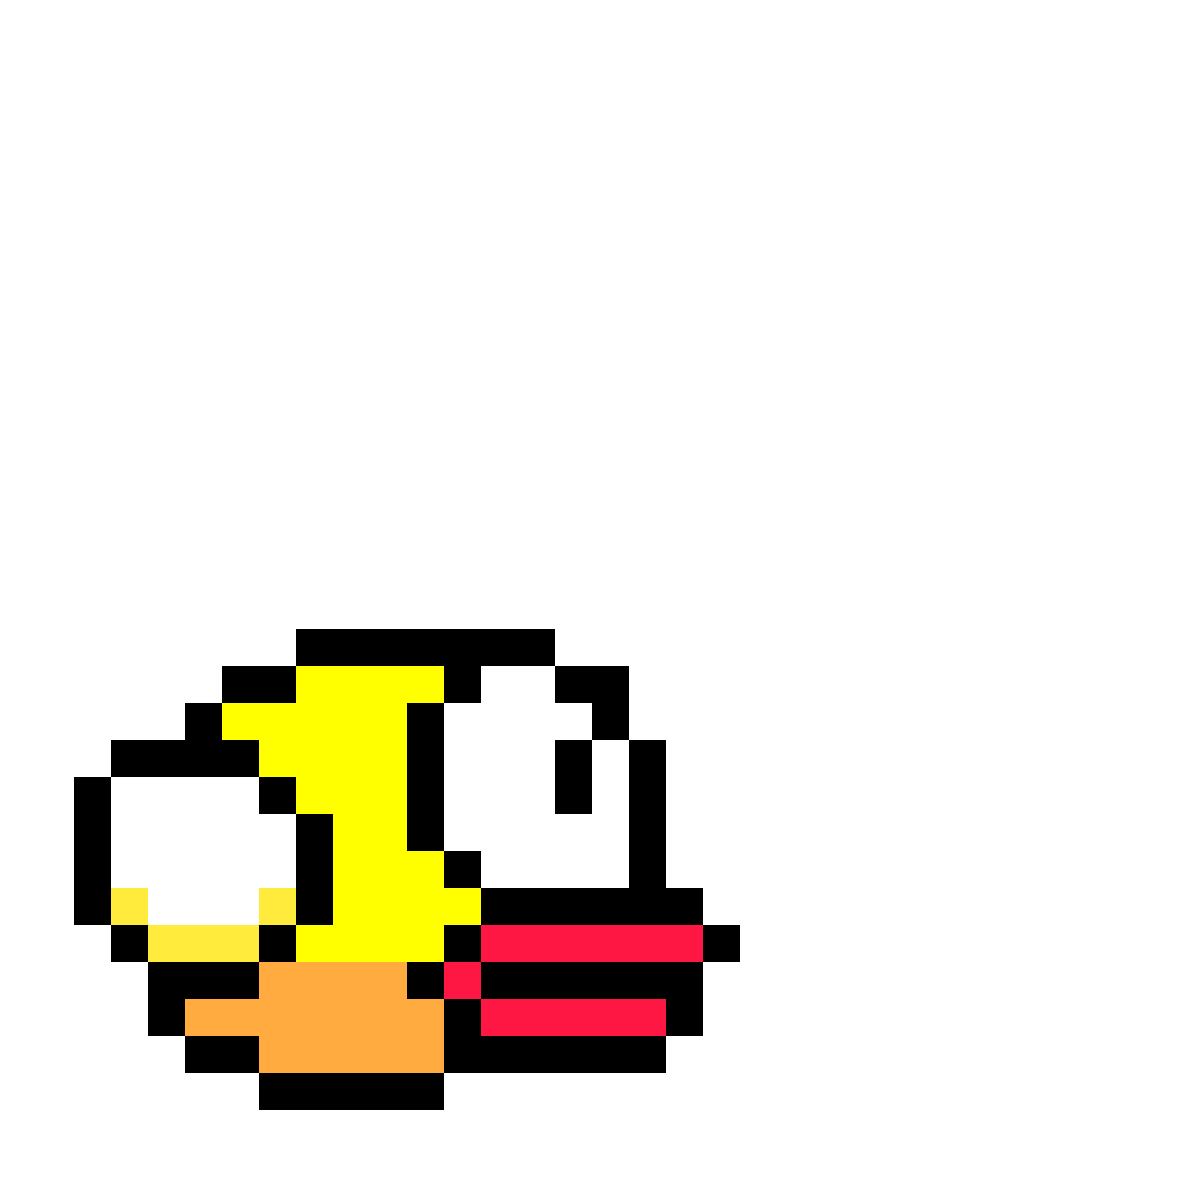 Flappy Bird Pixel Art PNG Image Transparent Background